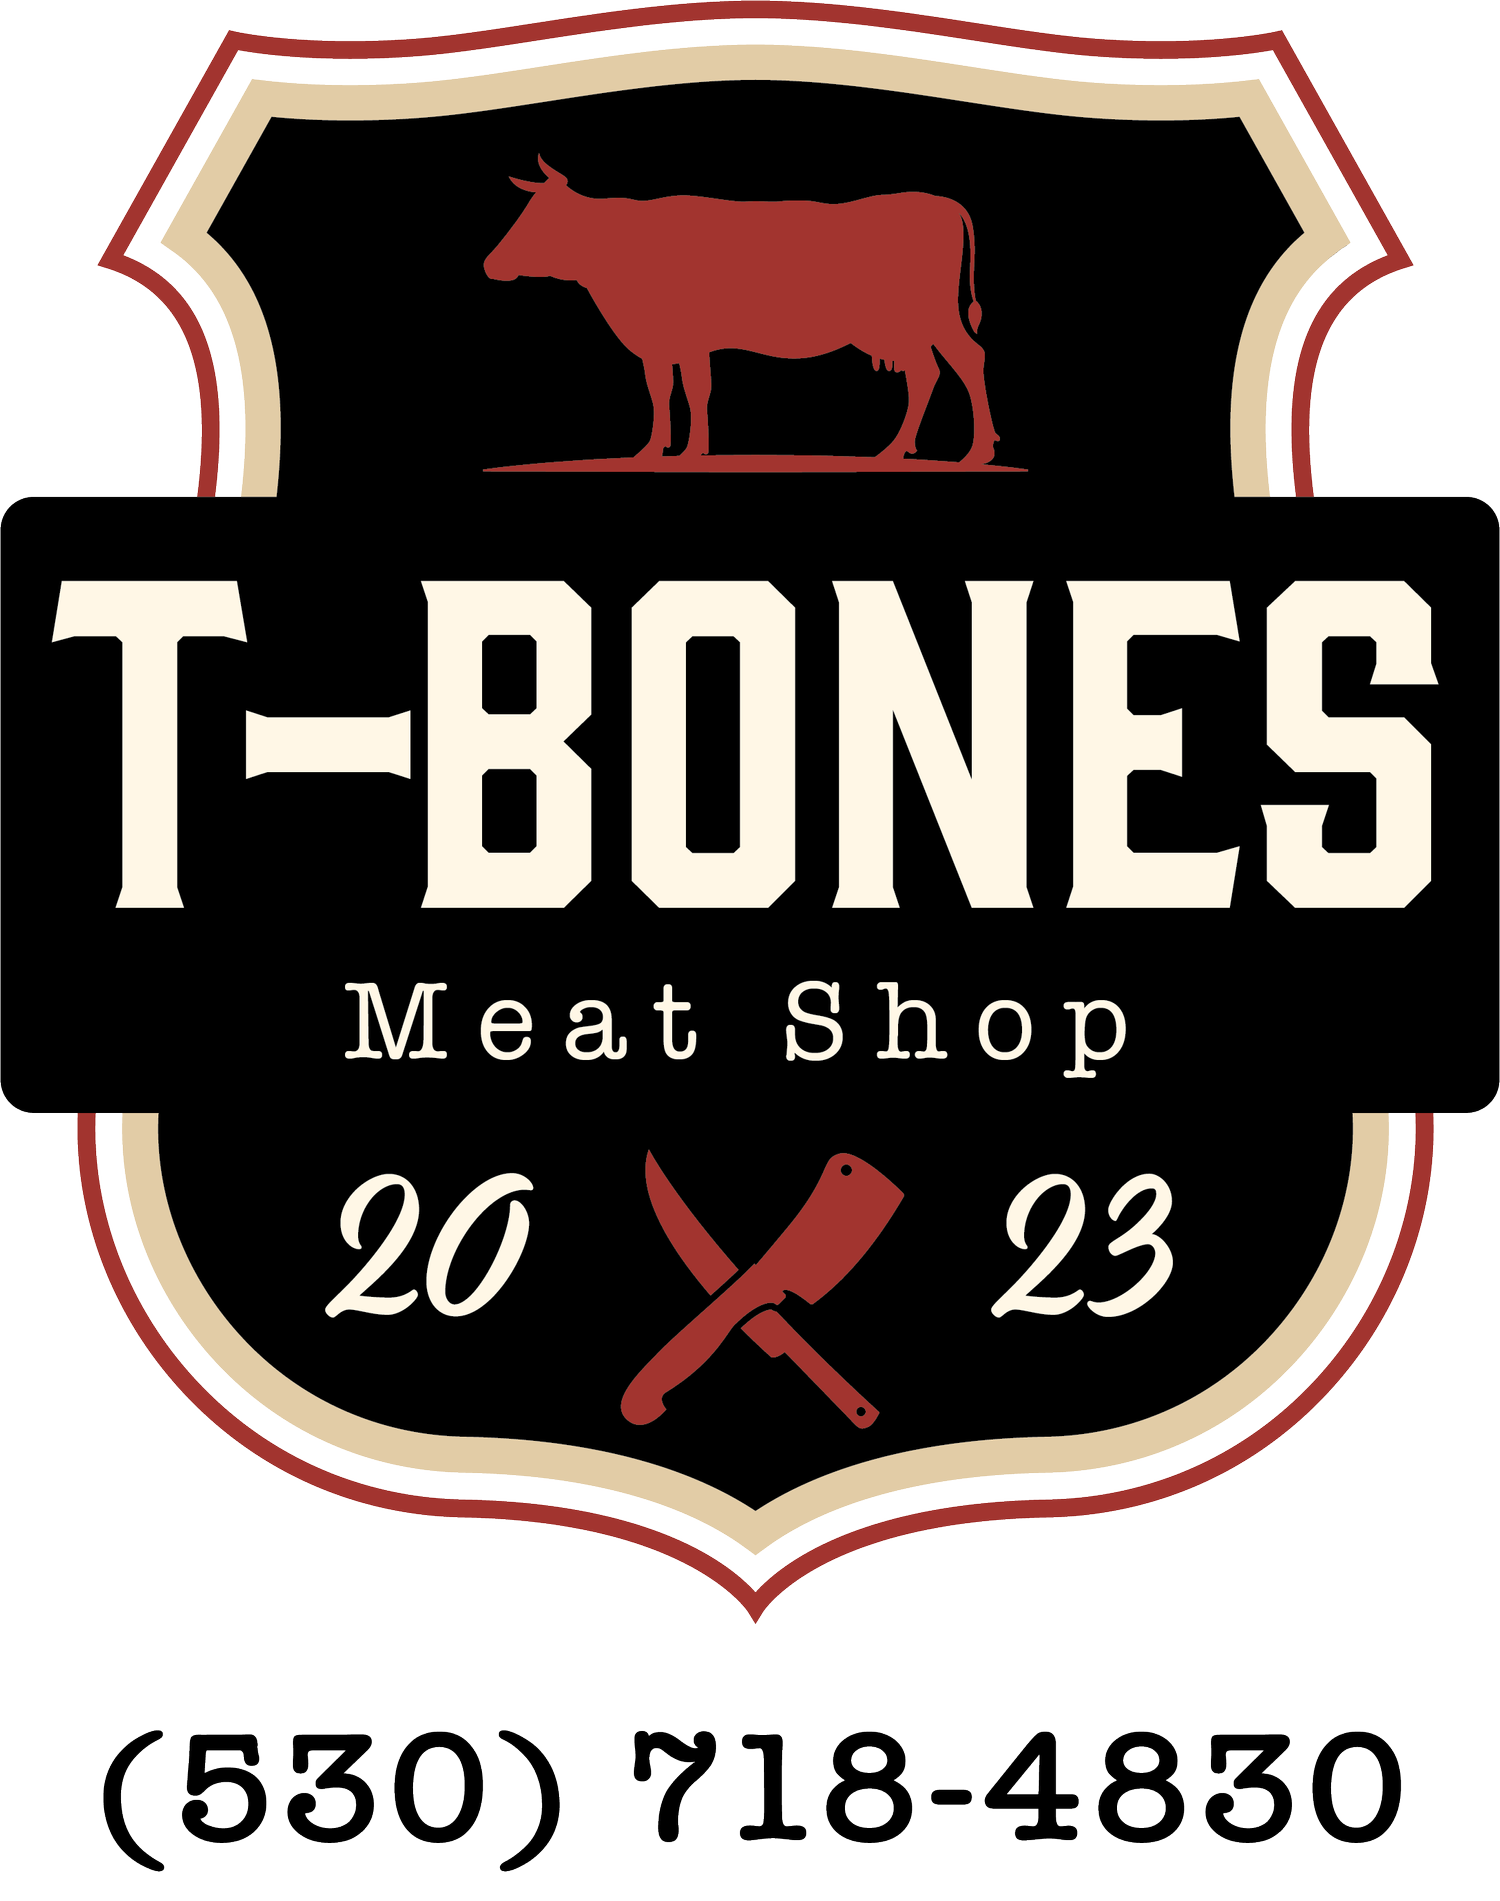 TBones Meat Shop